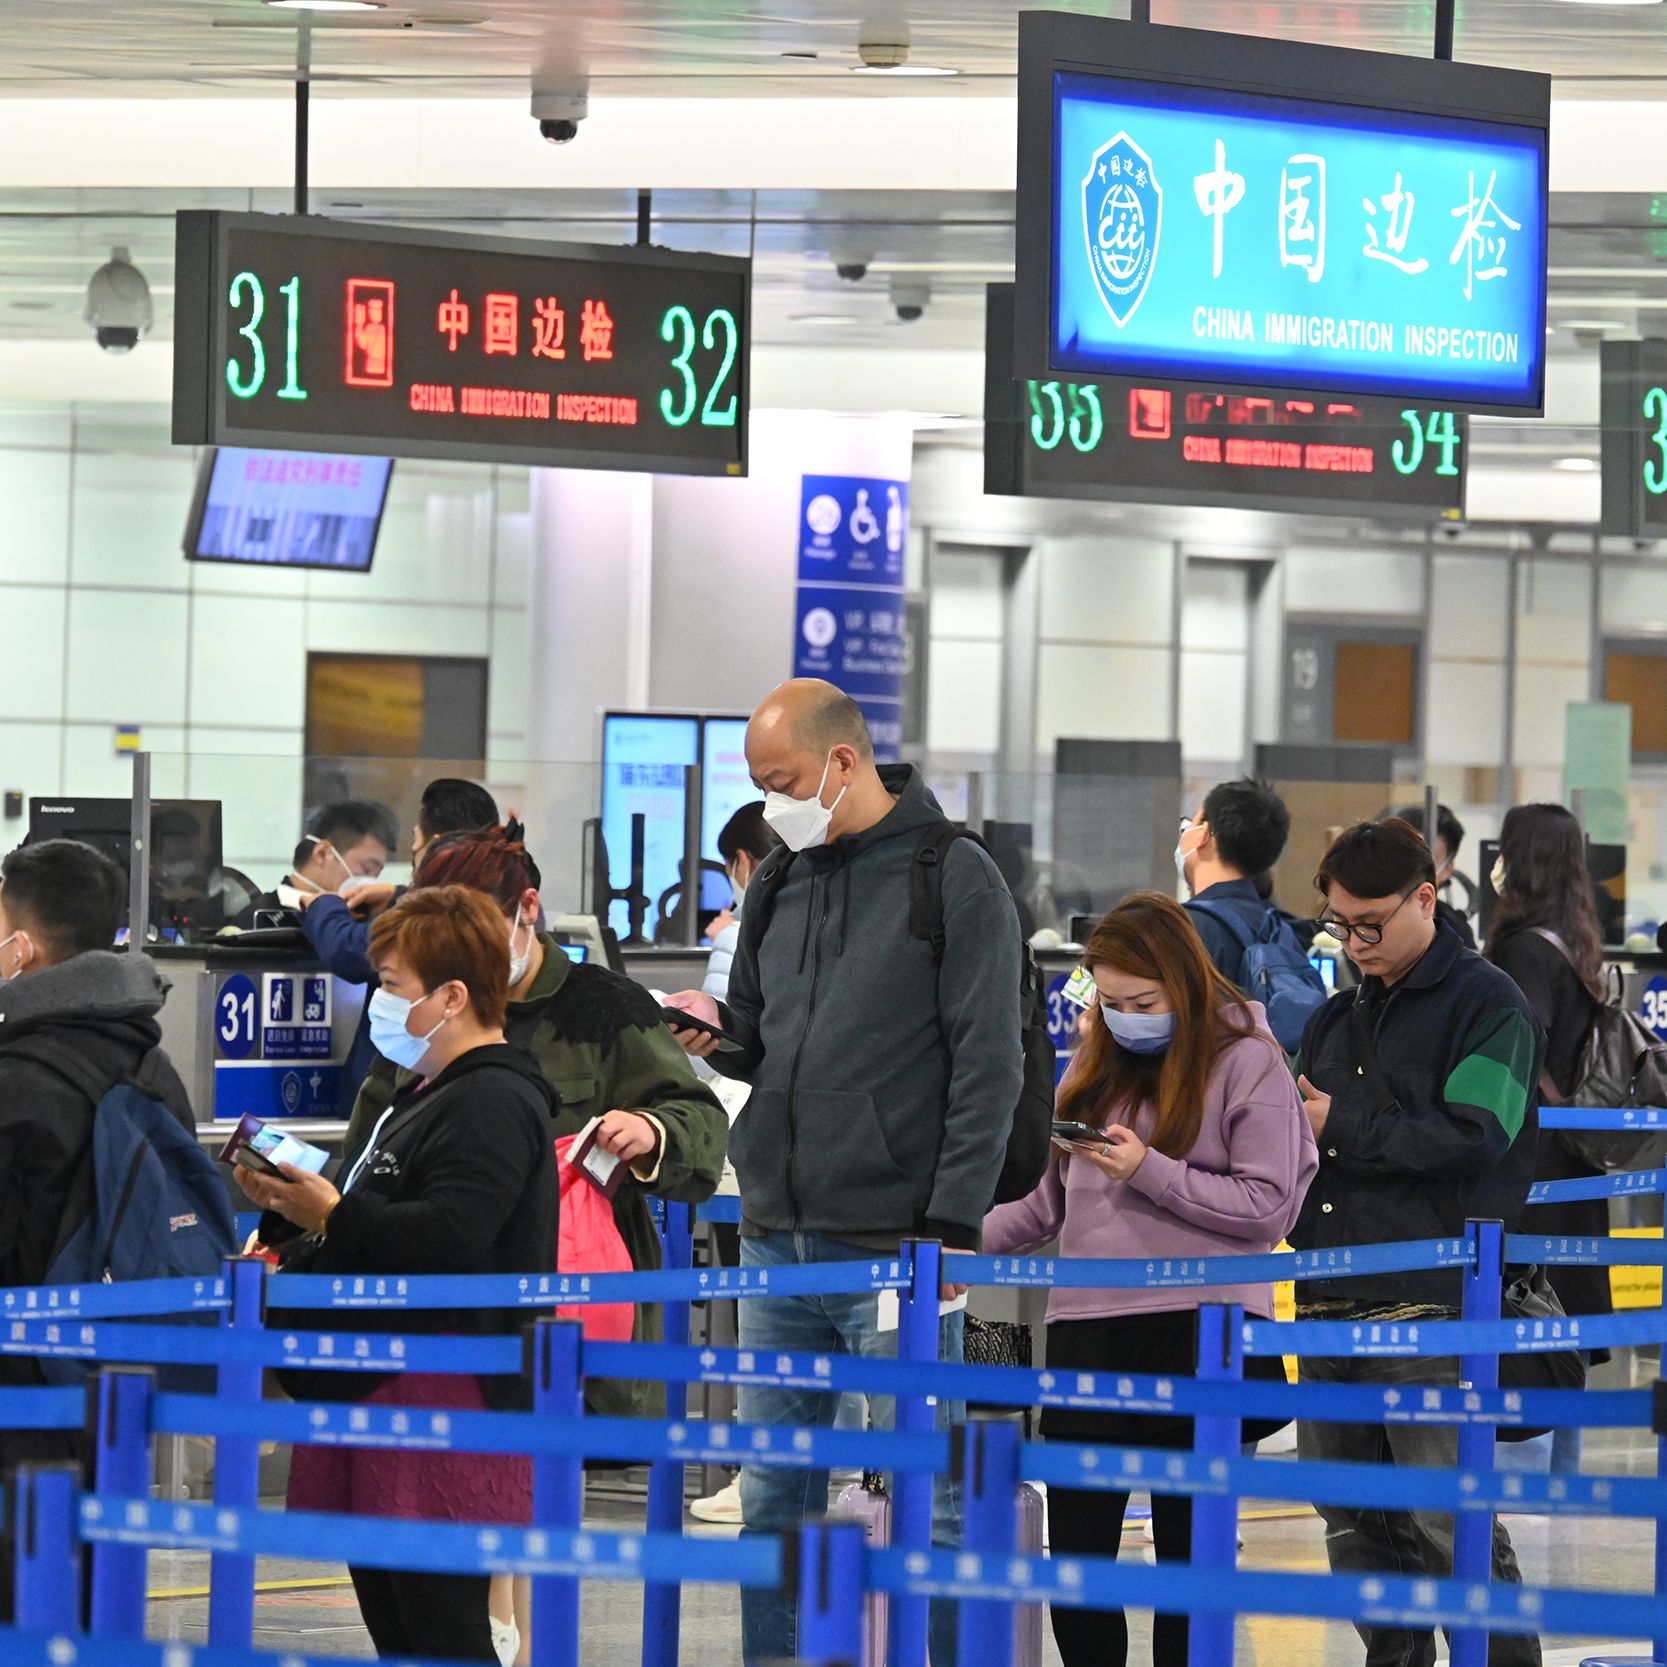 230313192016-china-travel-shanghai-airport.jpg